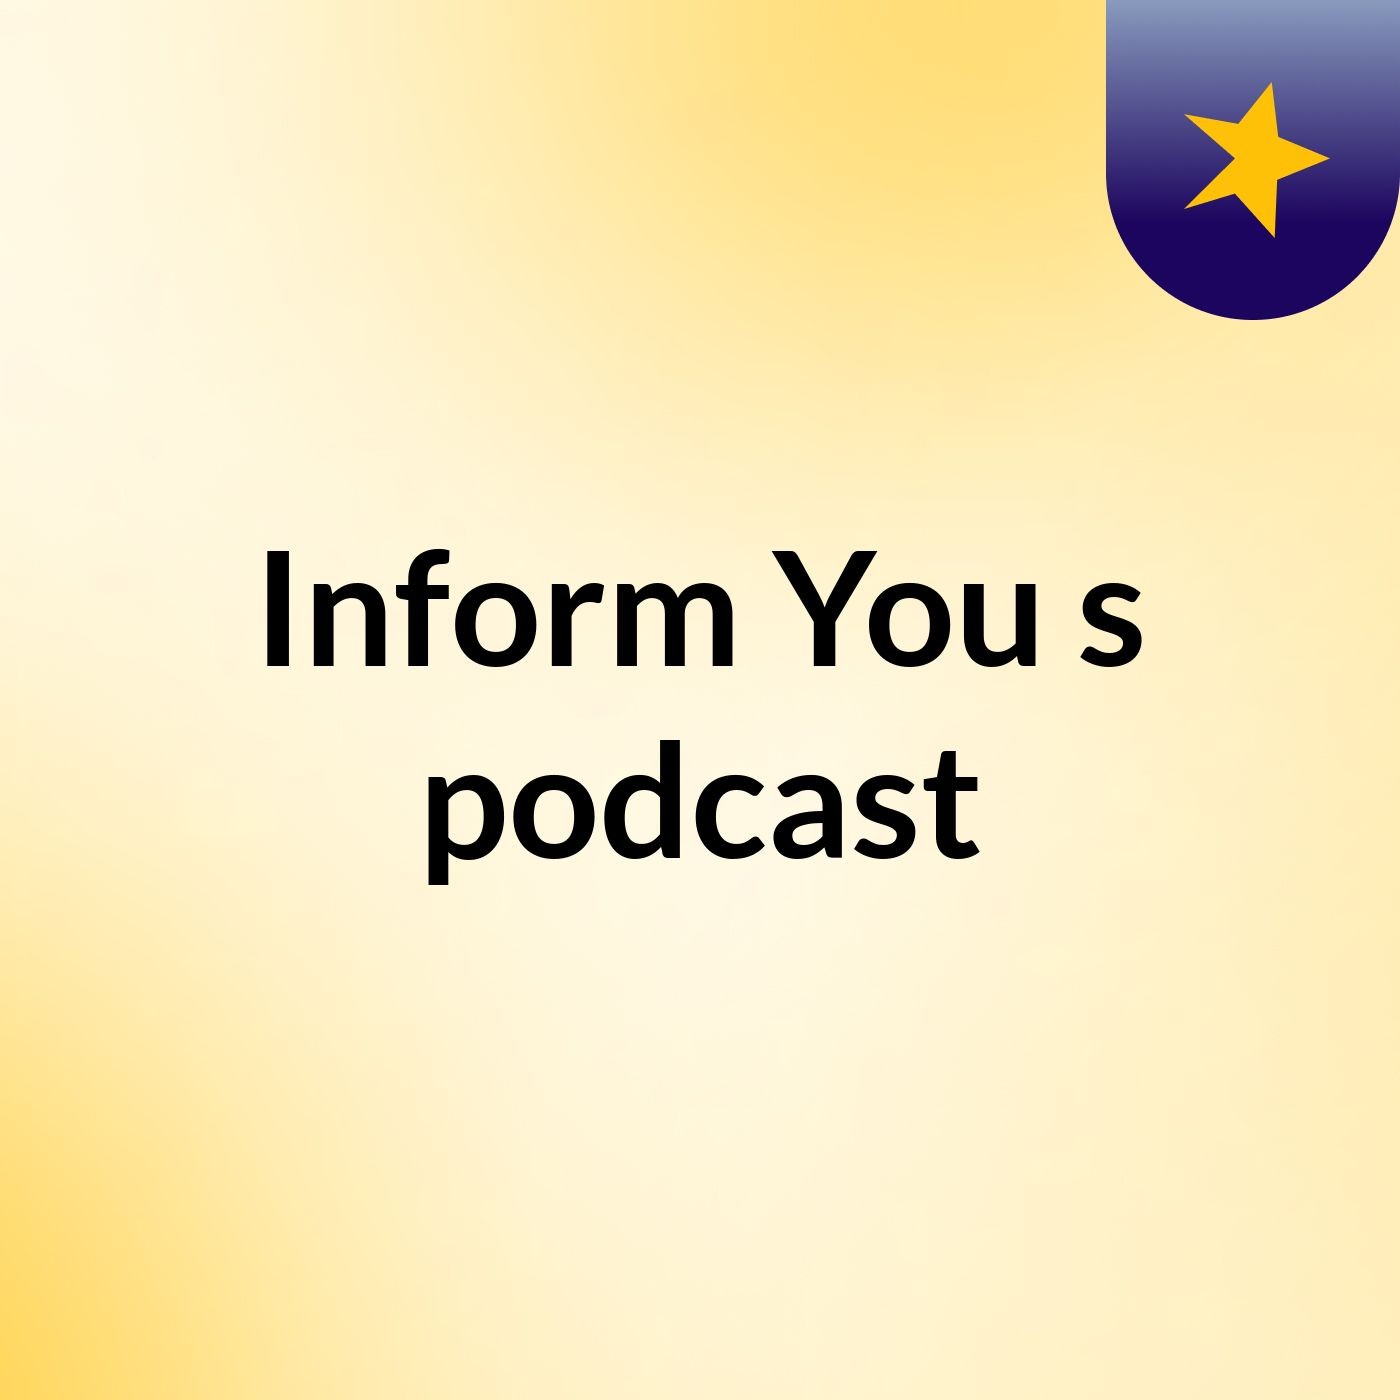 Inform You's podcast